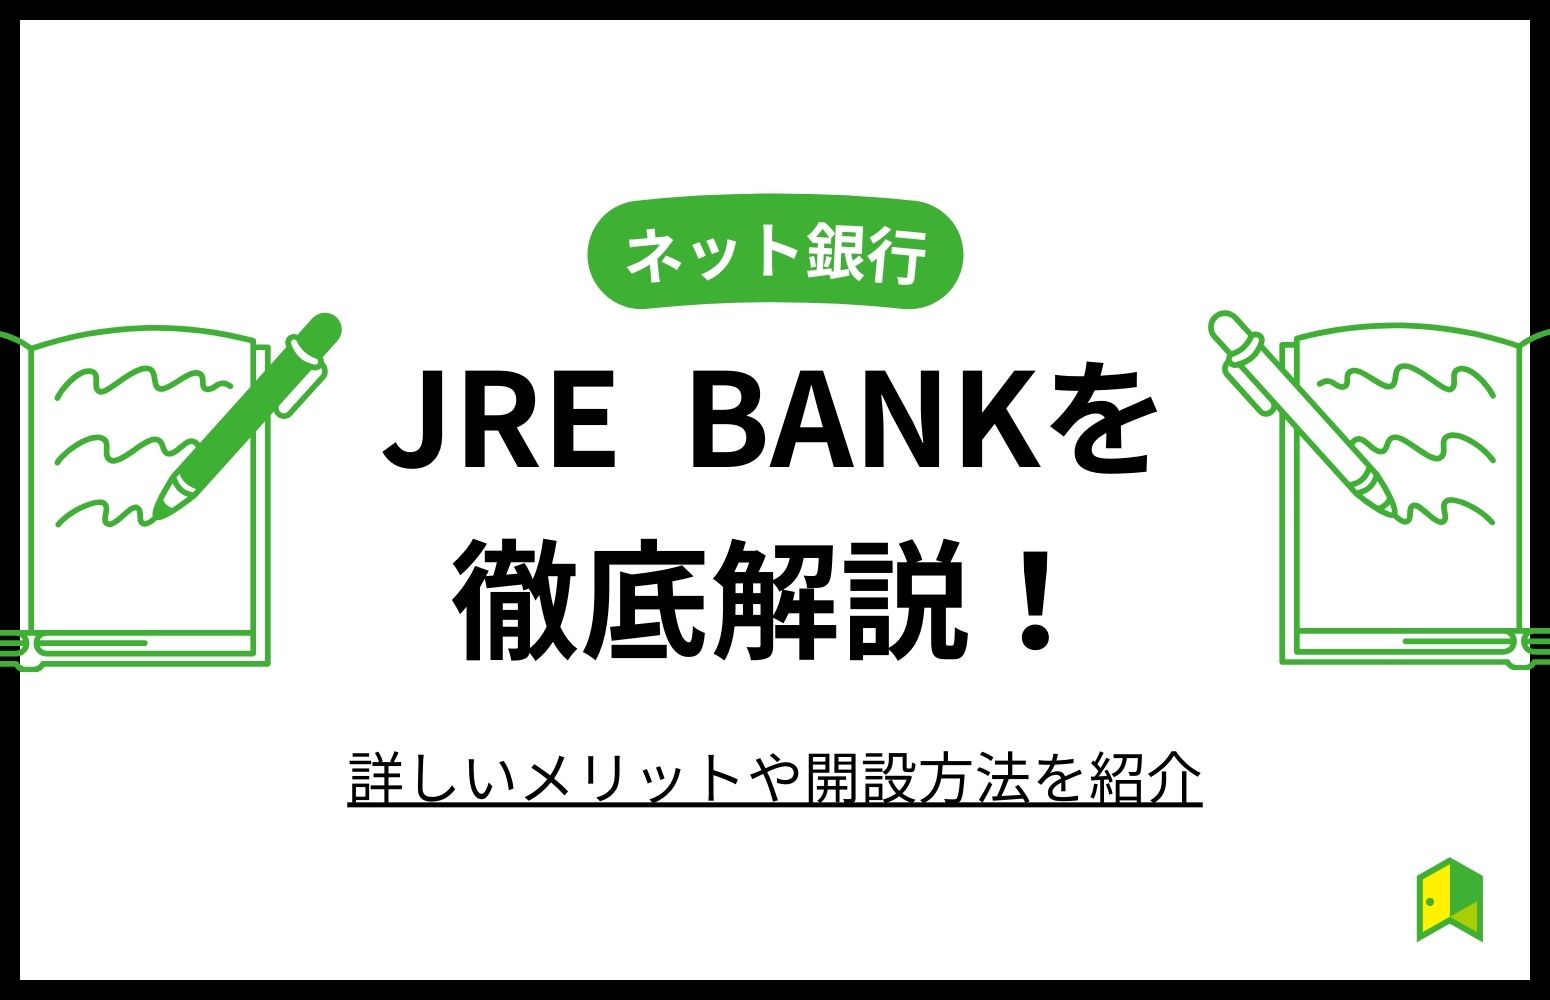 JR東日本のネット銀行 JRE BANKが始まる！詳しいメリットや開設方法を紹介